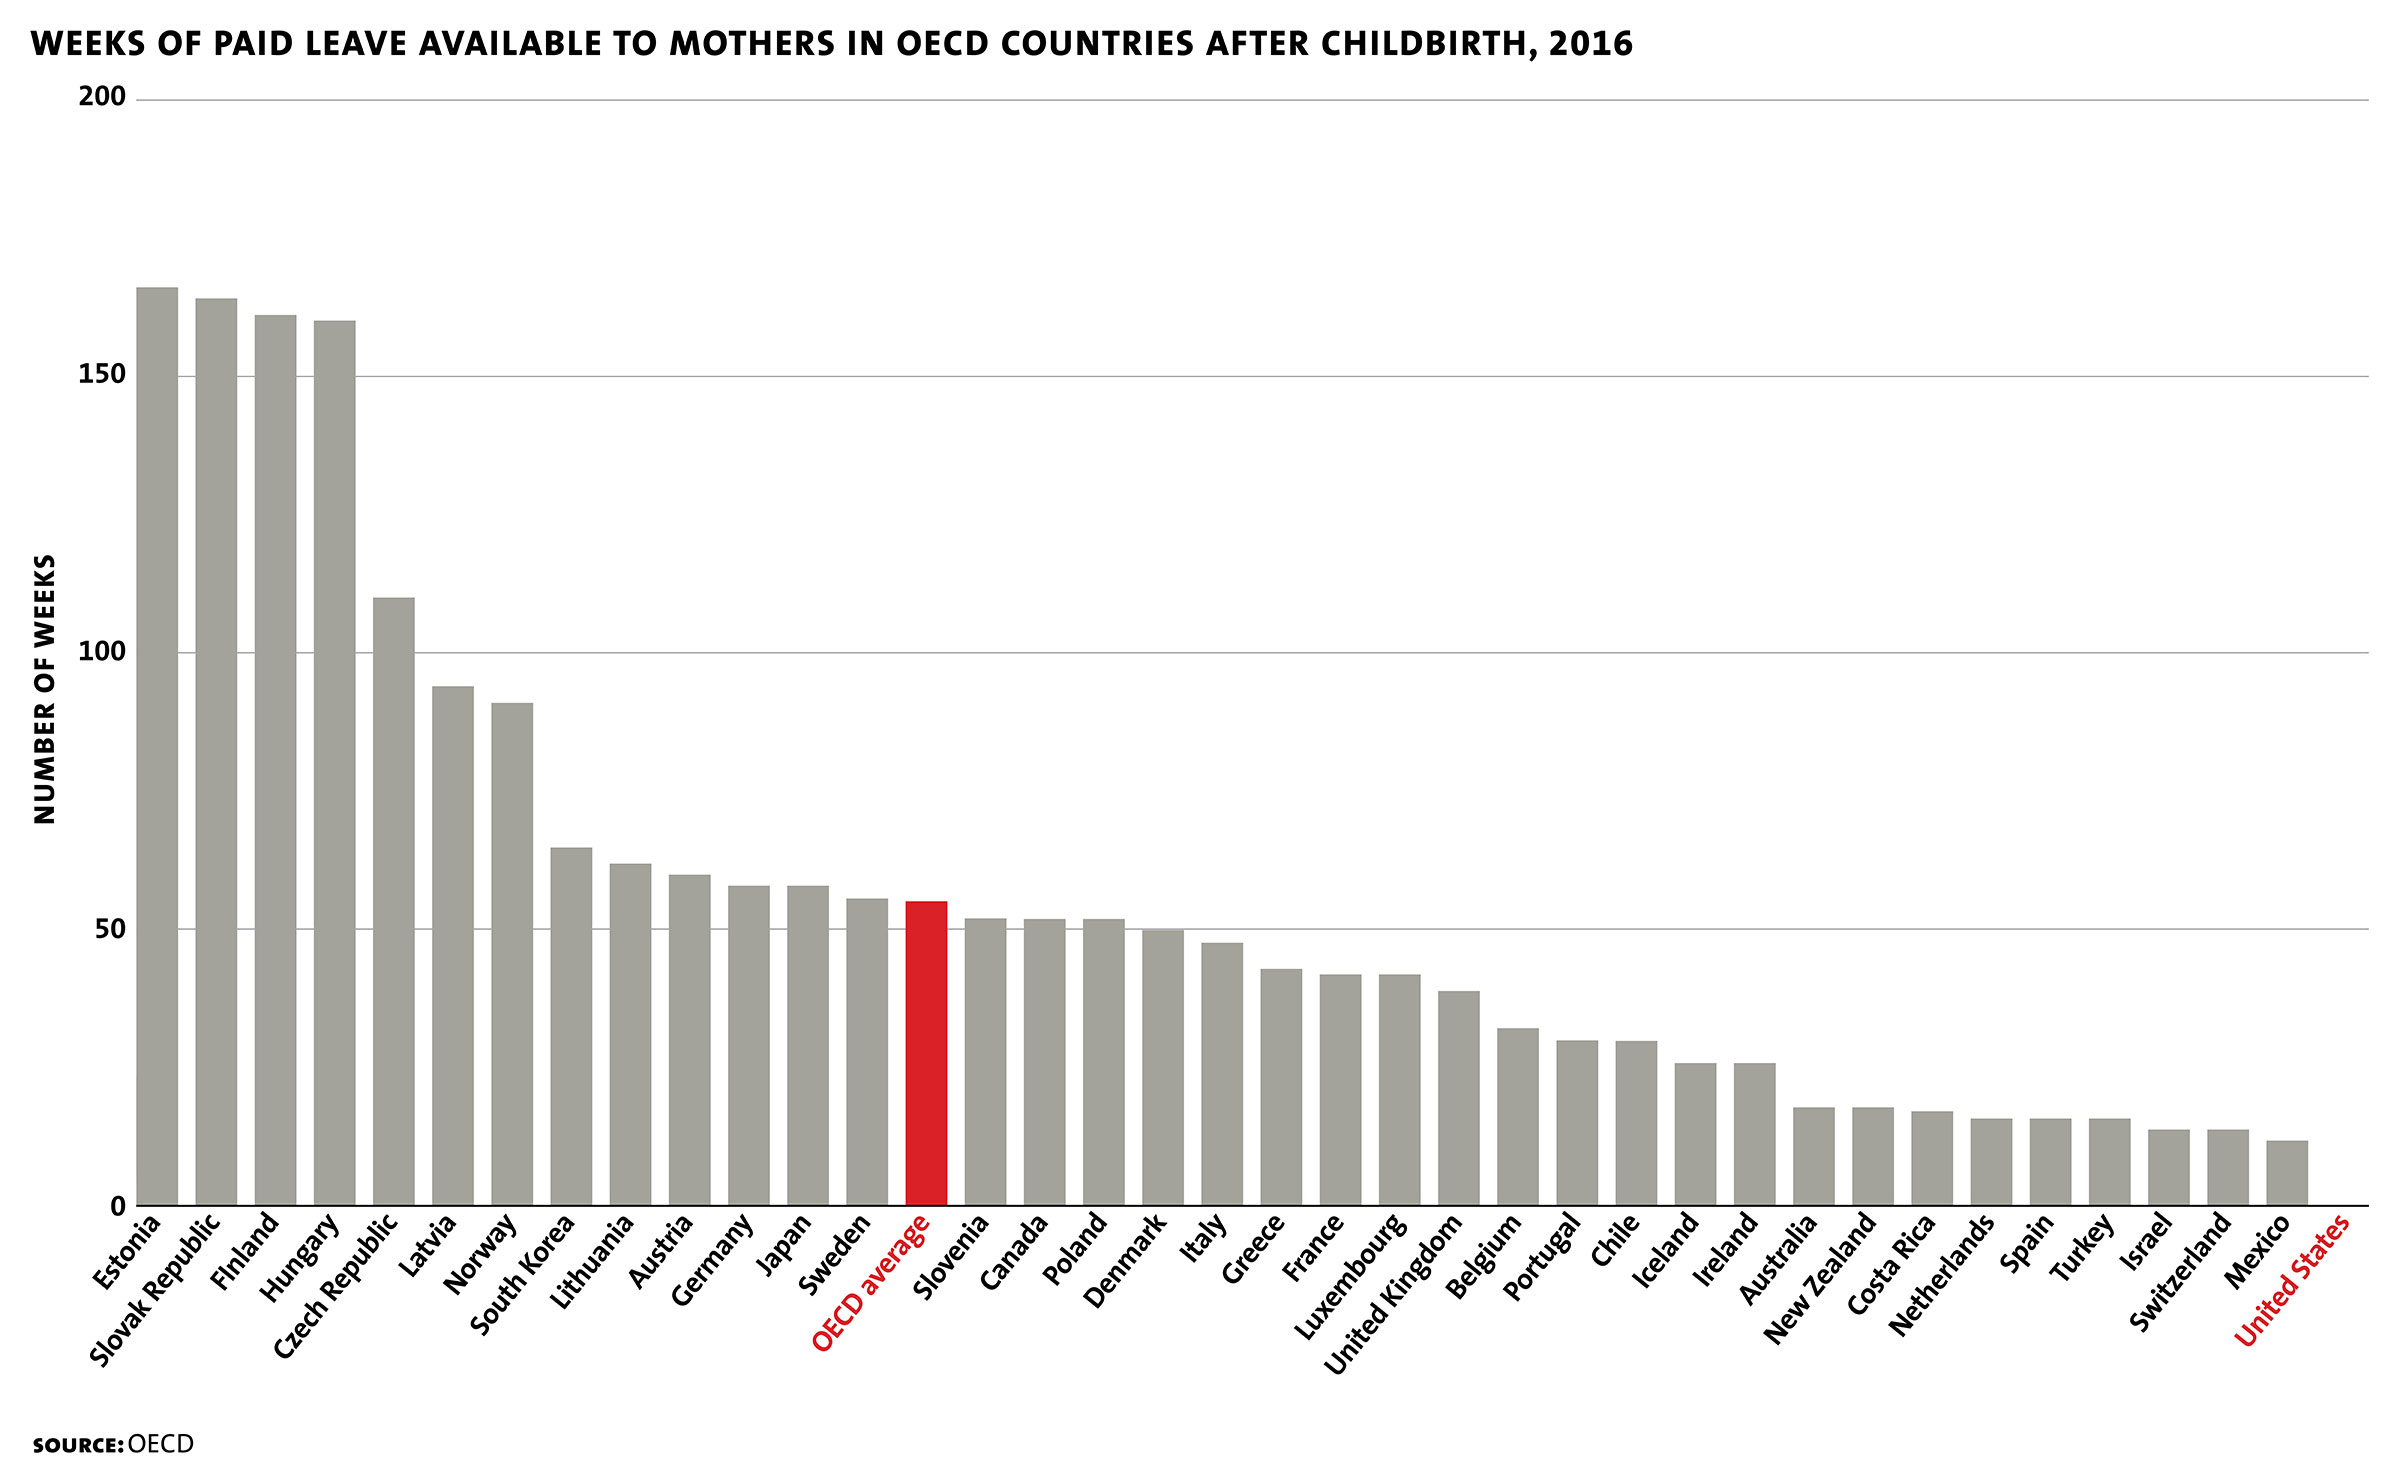 California Maternity Leave Chart